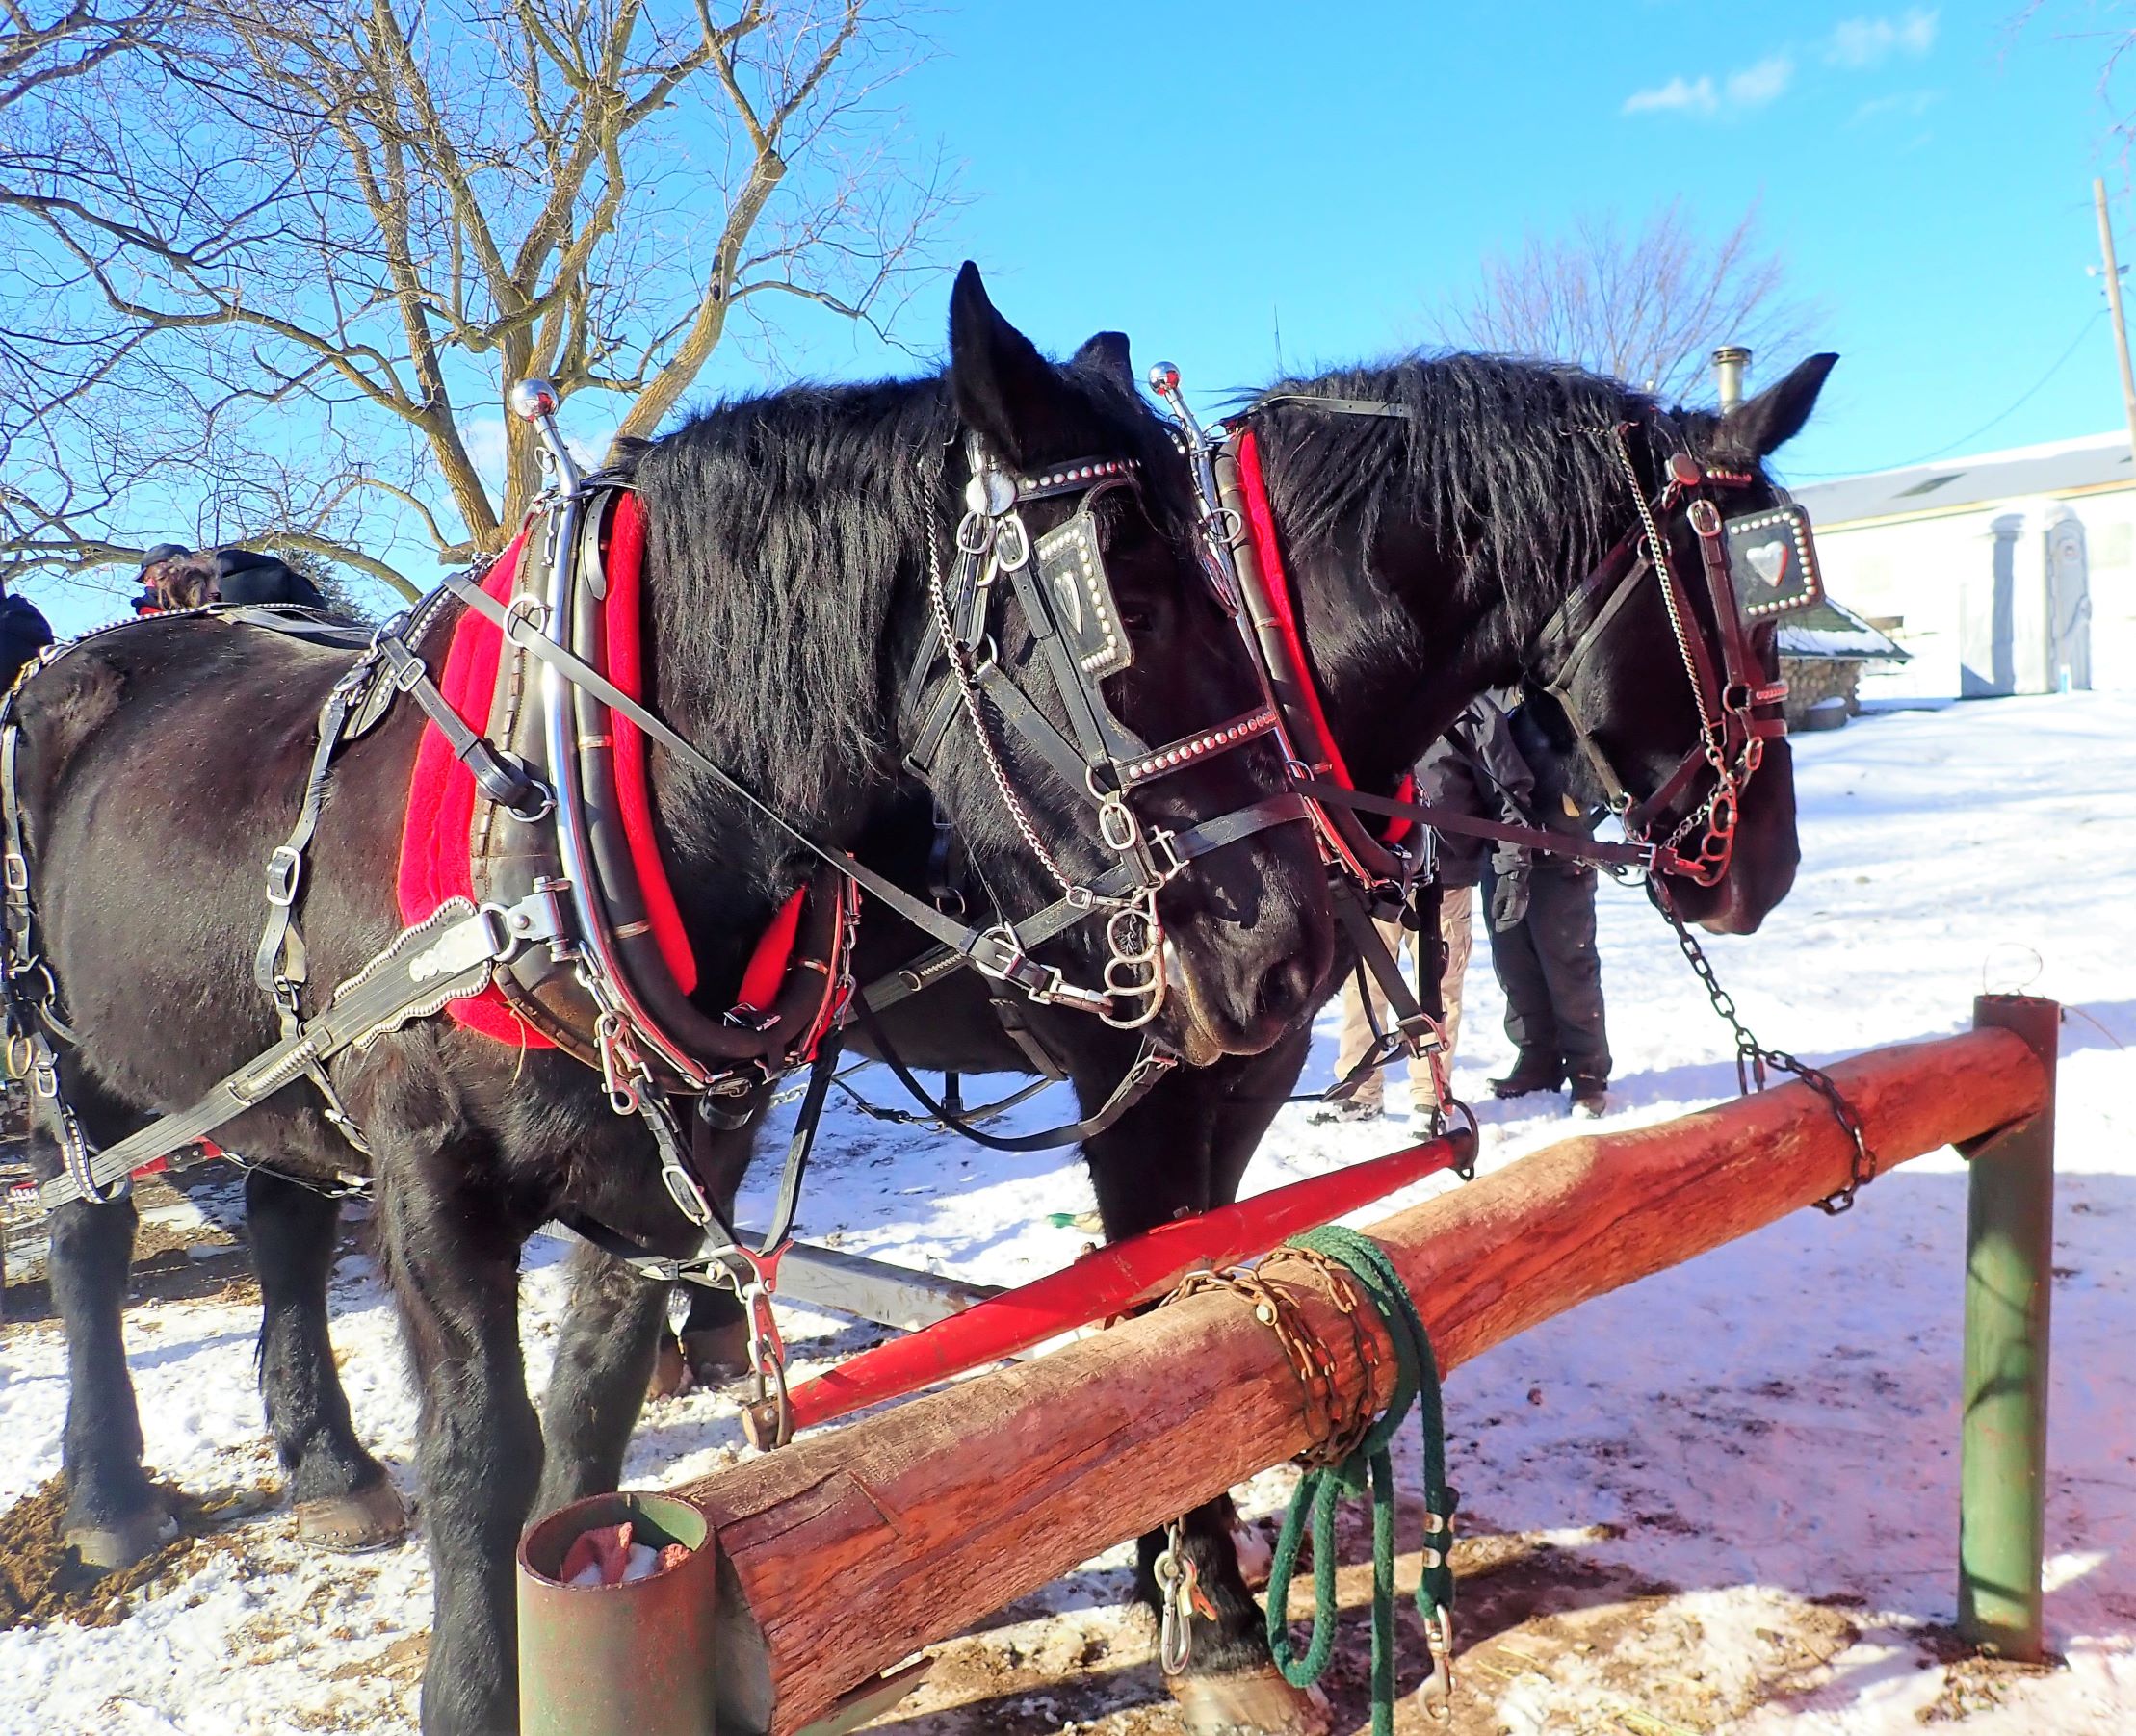 Enjoy a sleigh ride this winter at Antler Ridge Farms